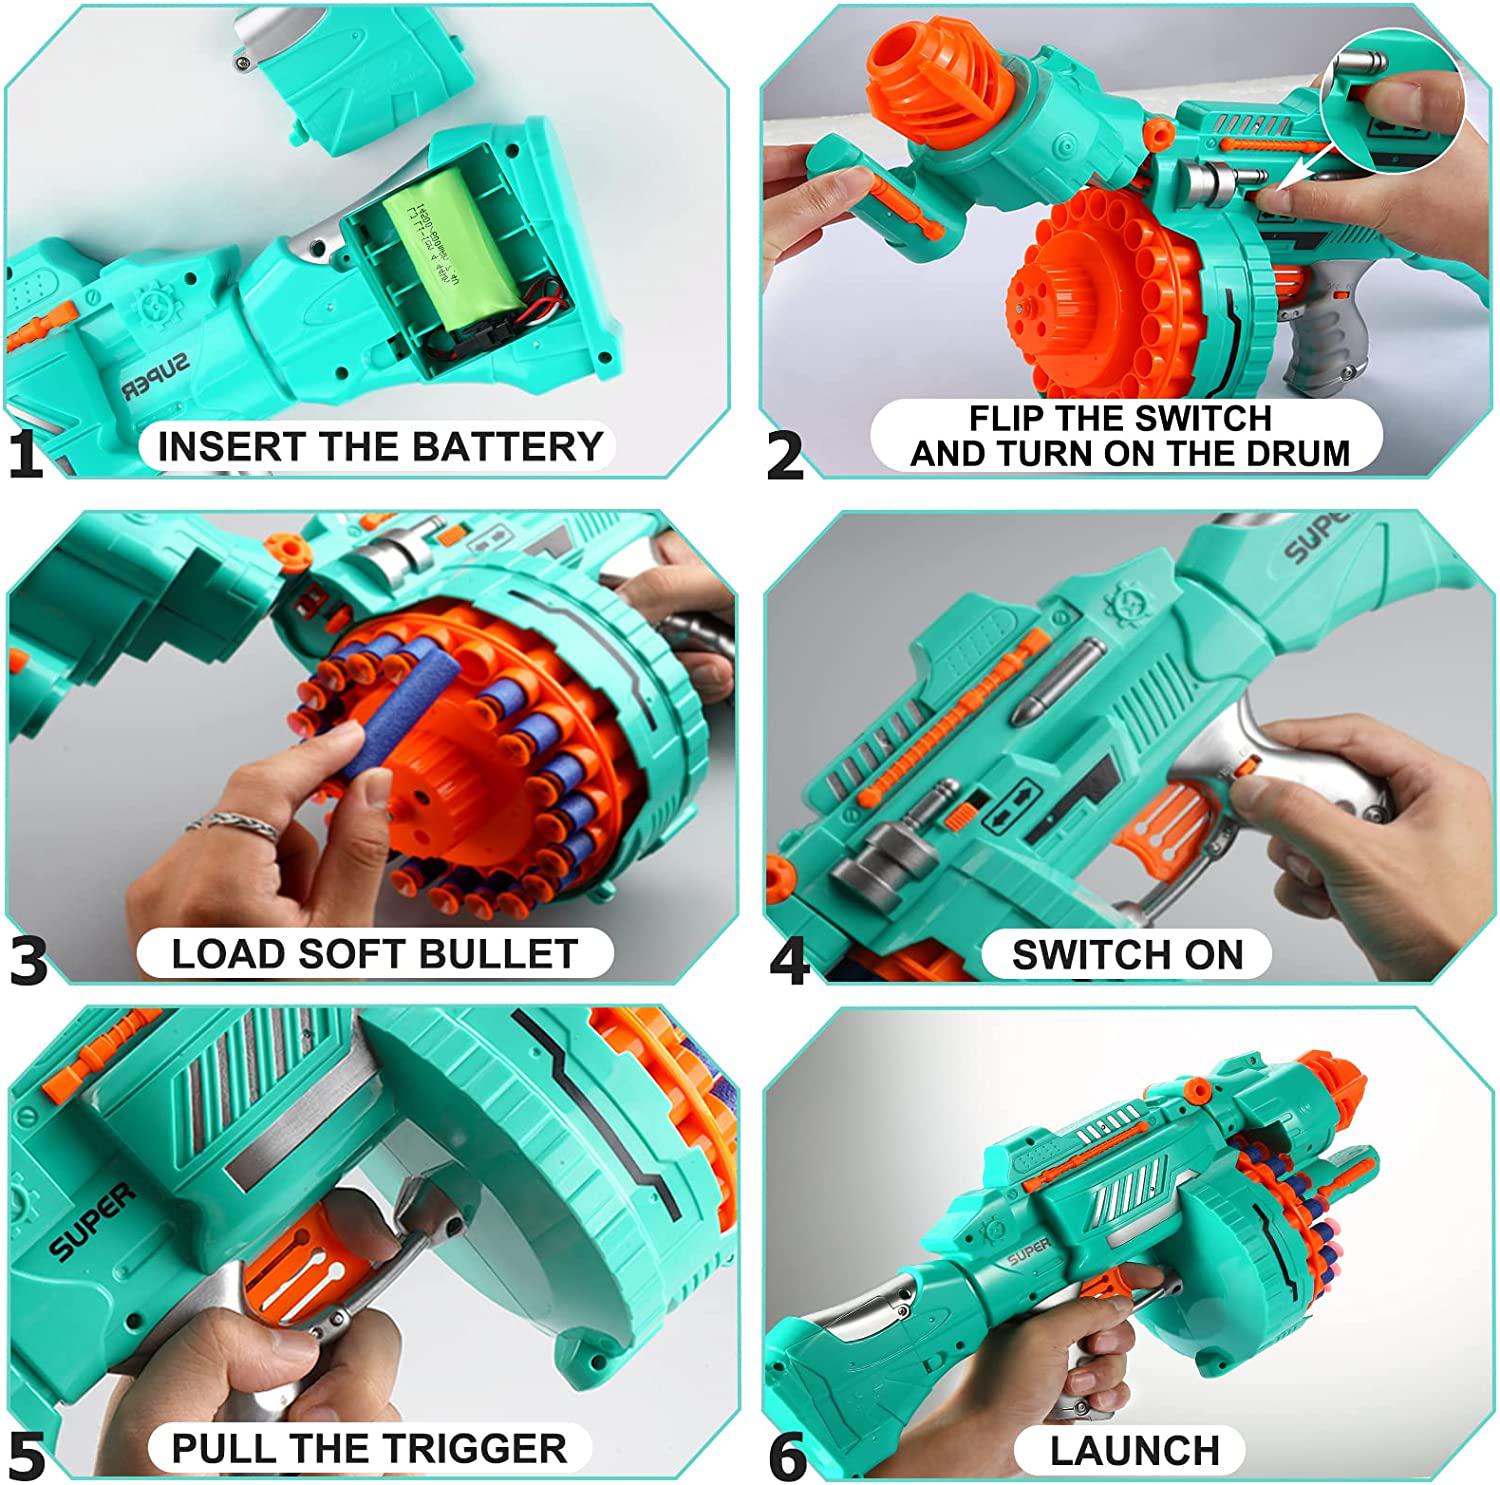 Kids Automatic Electric Toy Gun